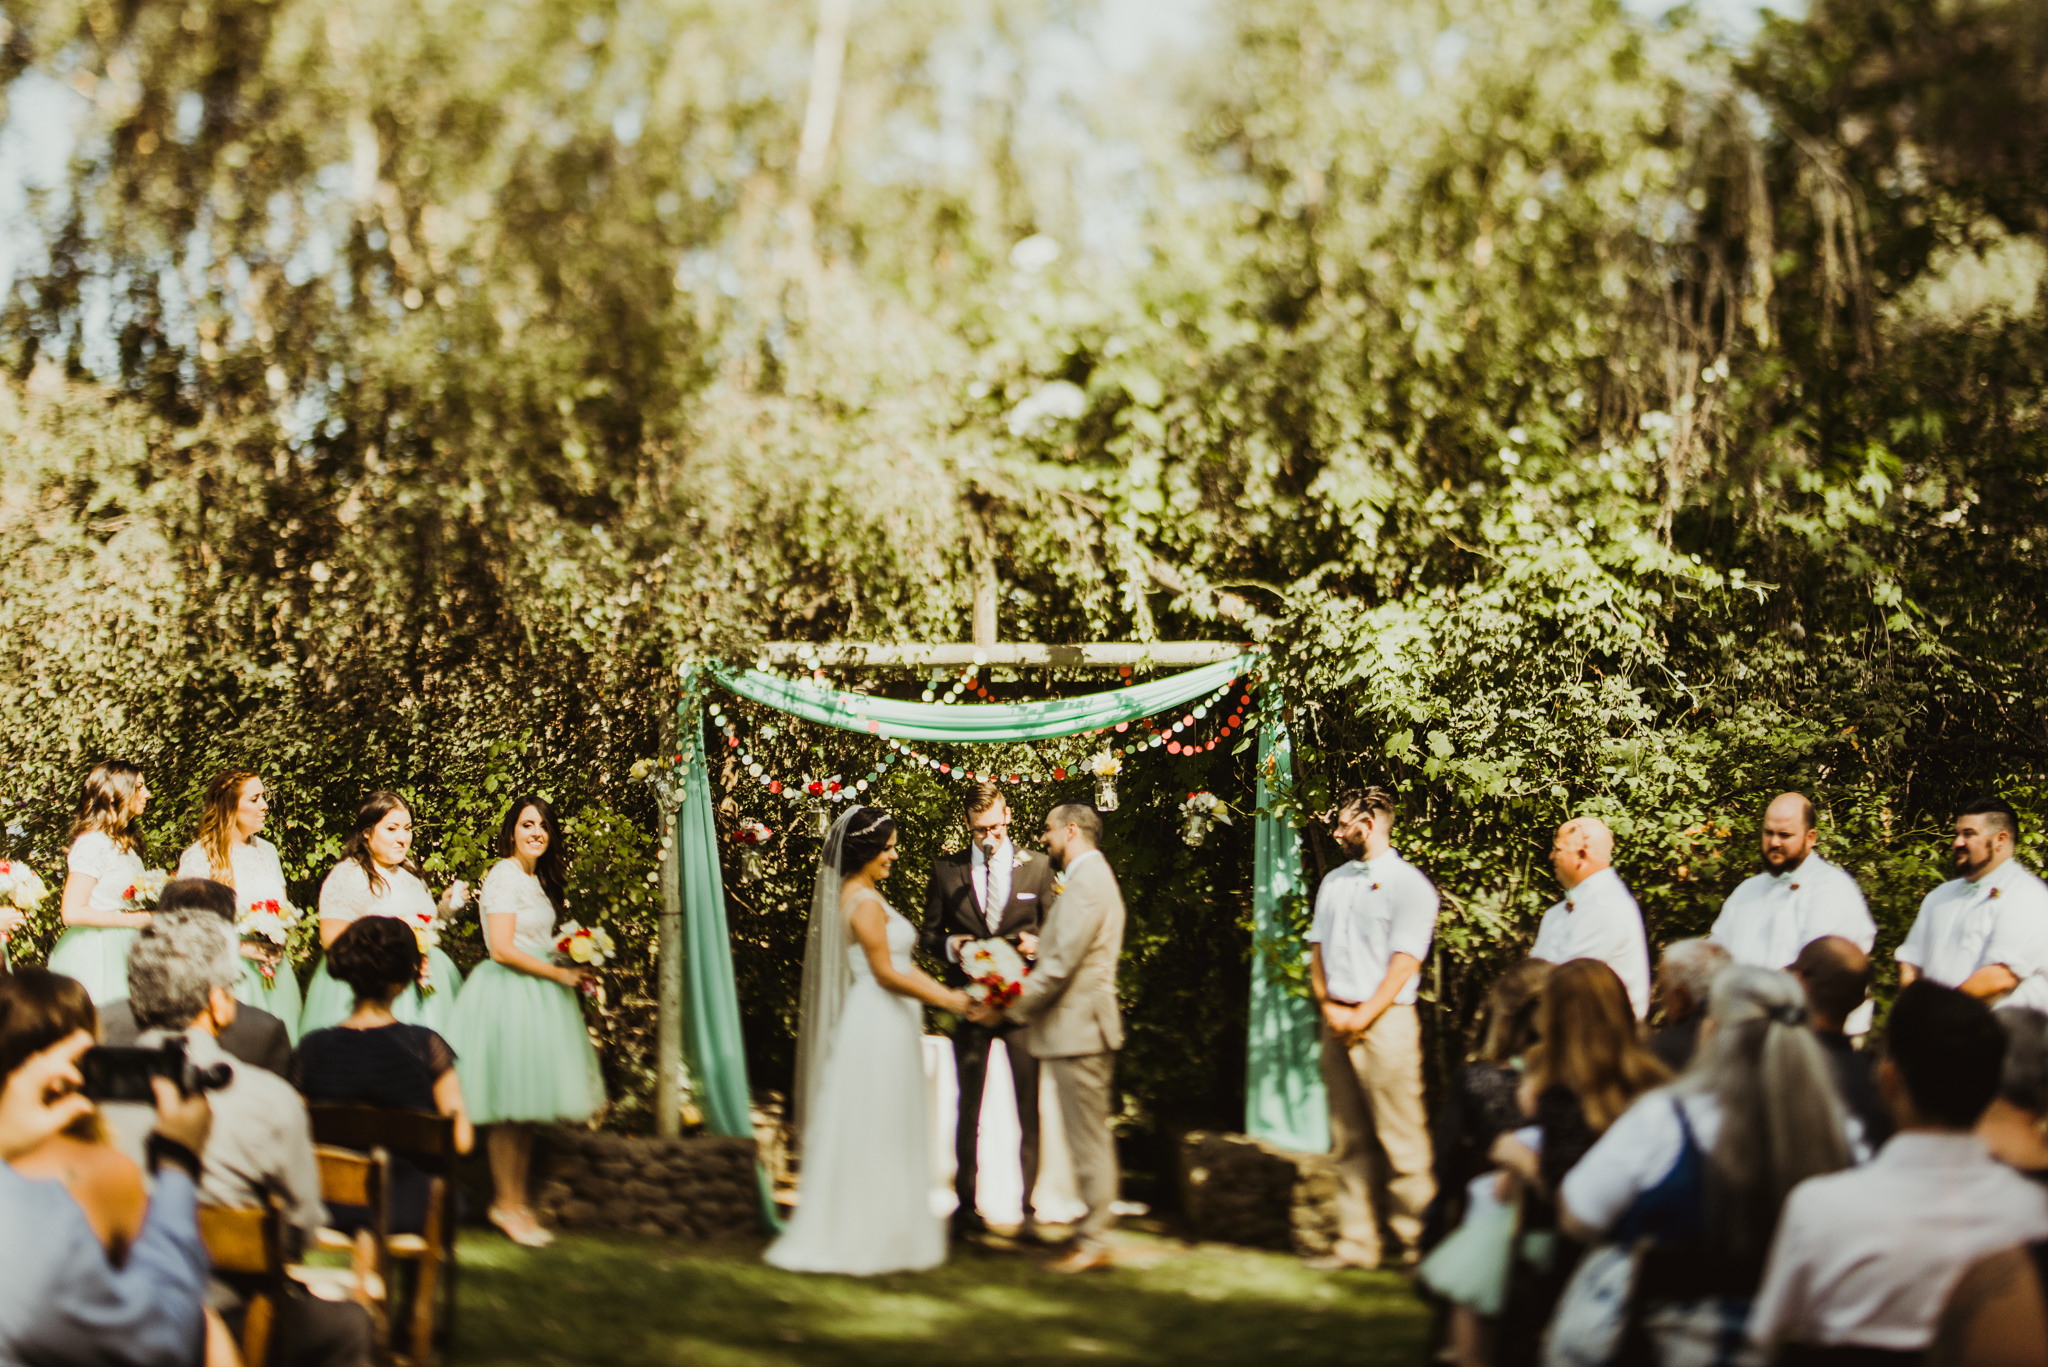 ©Isaiah + Taylor Photography - Brendan + Stefana, Quail Haven Farm Wedding, Vista-62.jpg